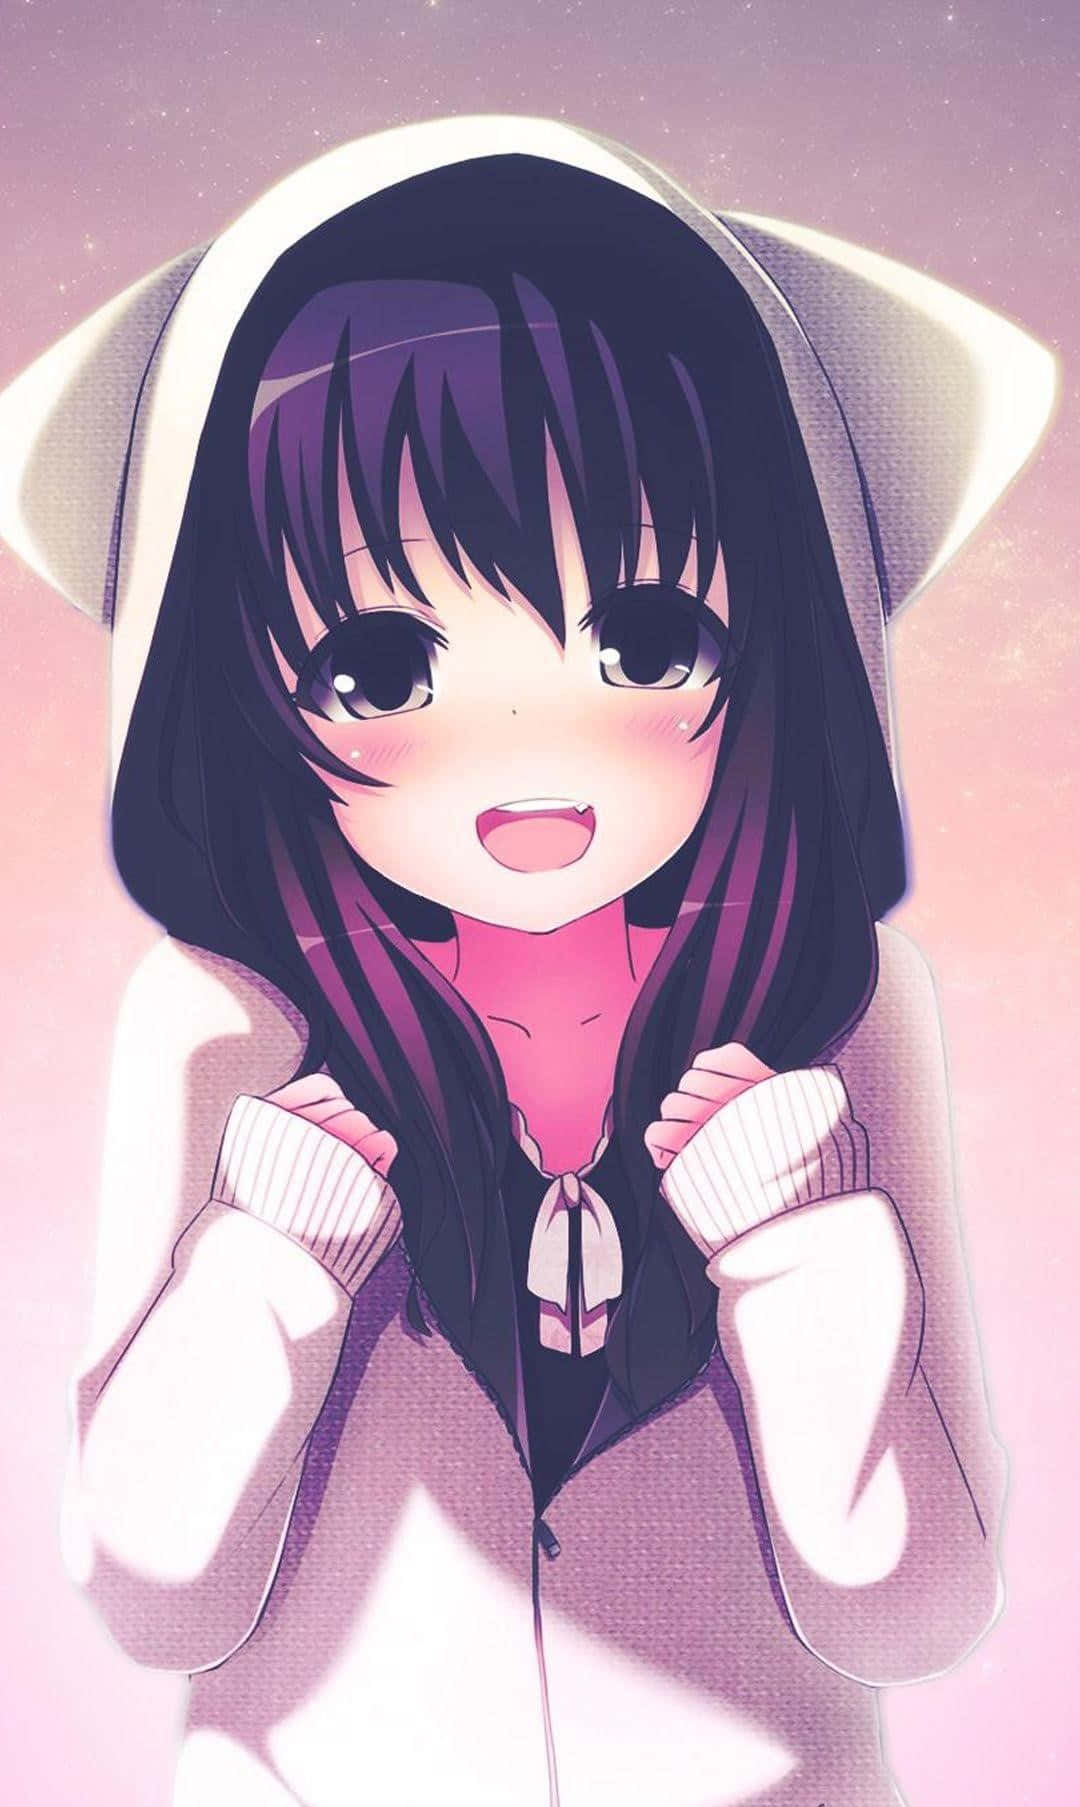 Smiling Anime Girlin Hoodie Wallpaper